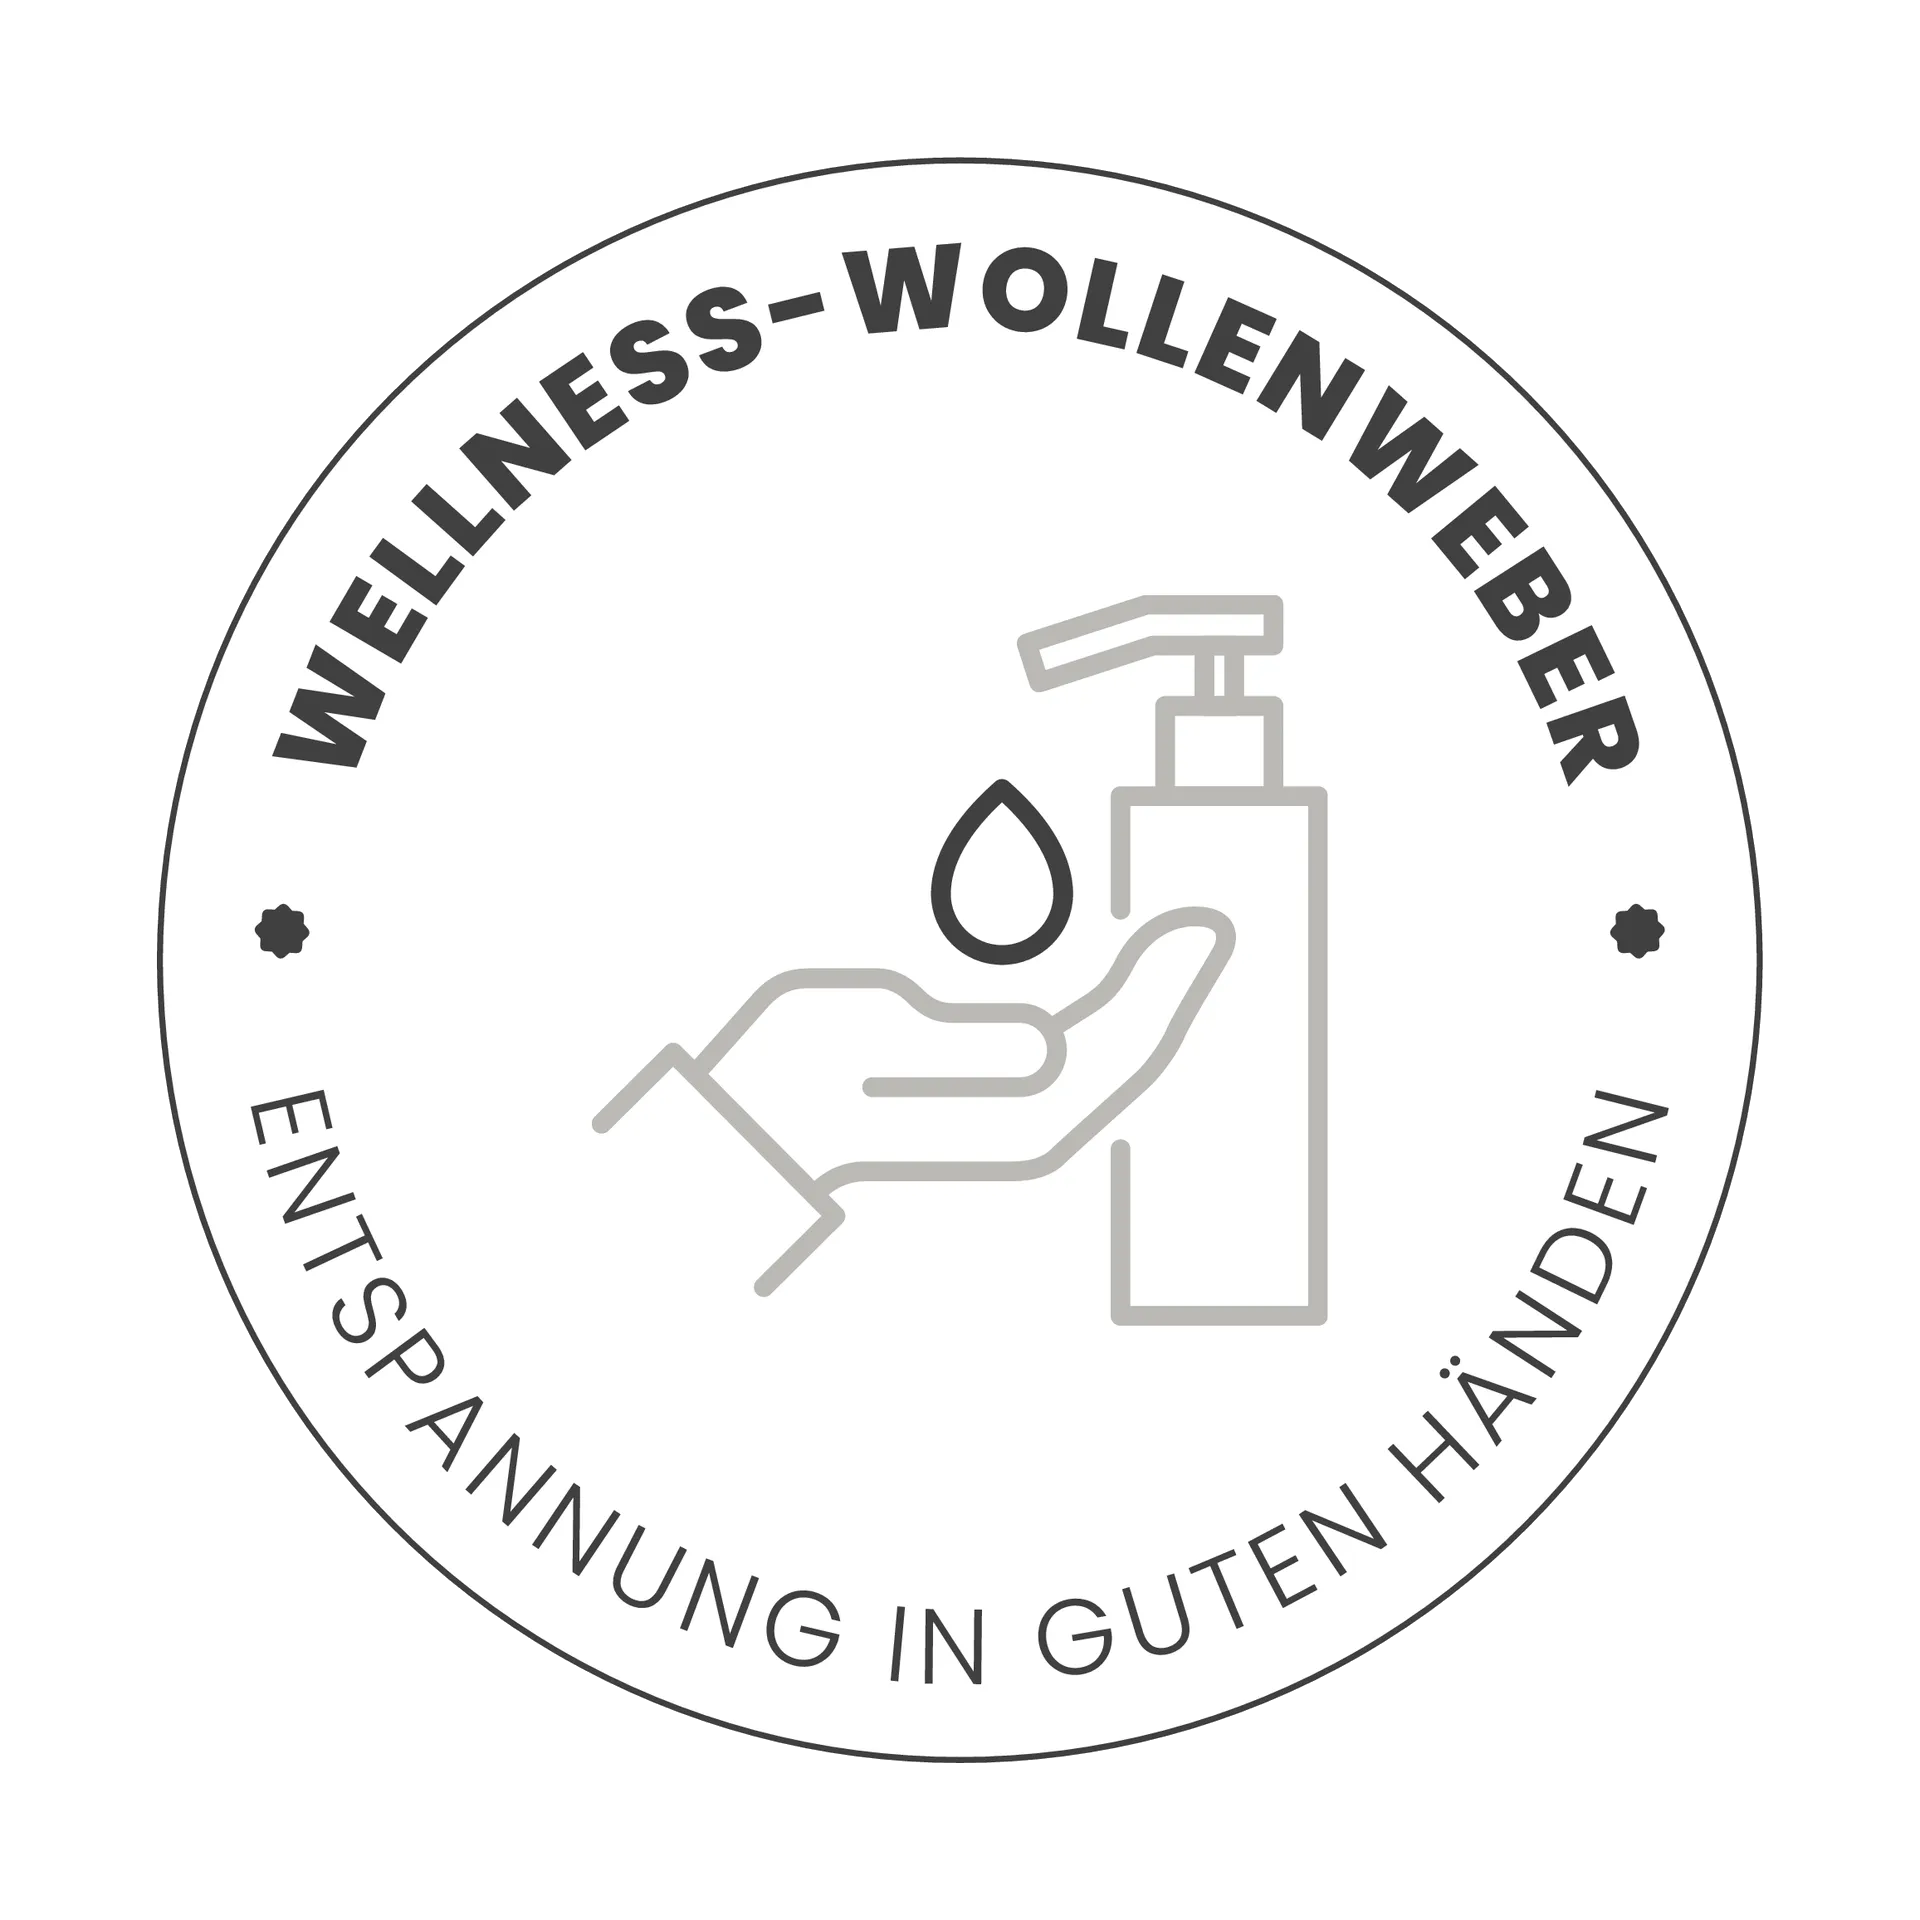 Logo Wellness-Wollenweber